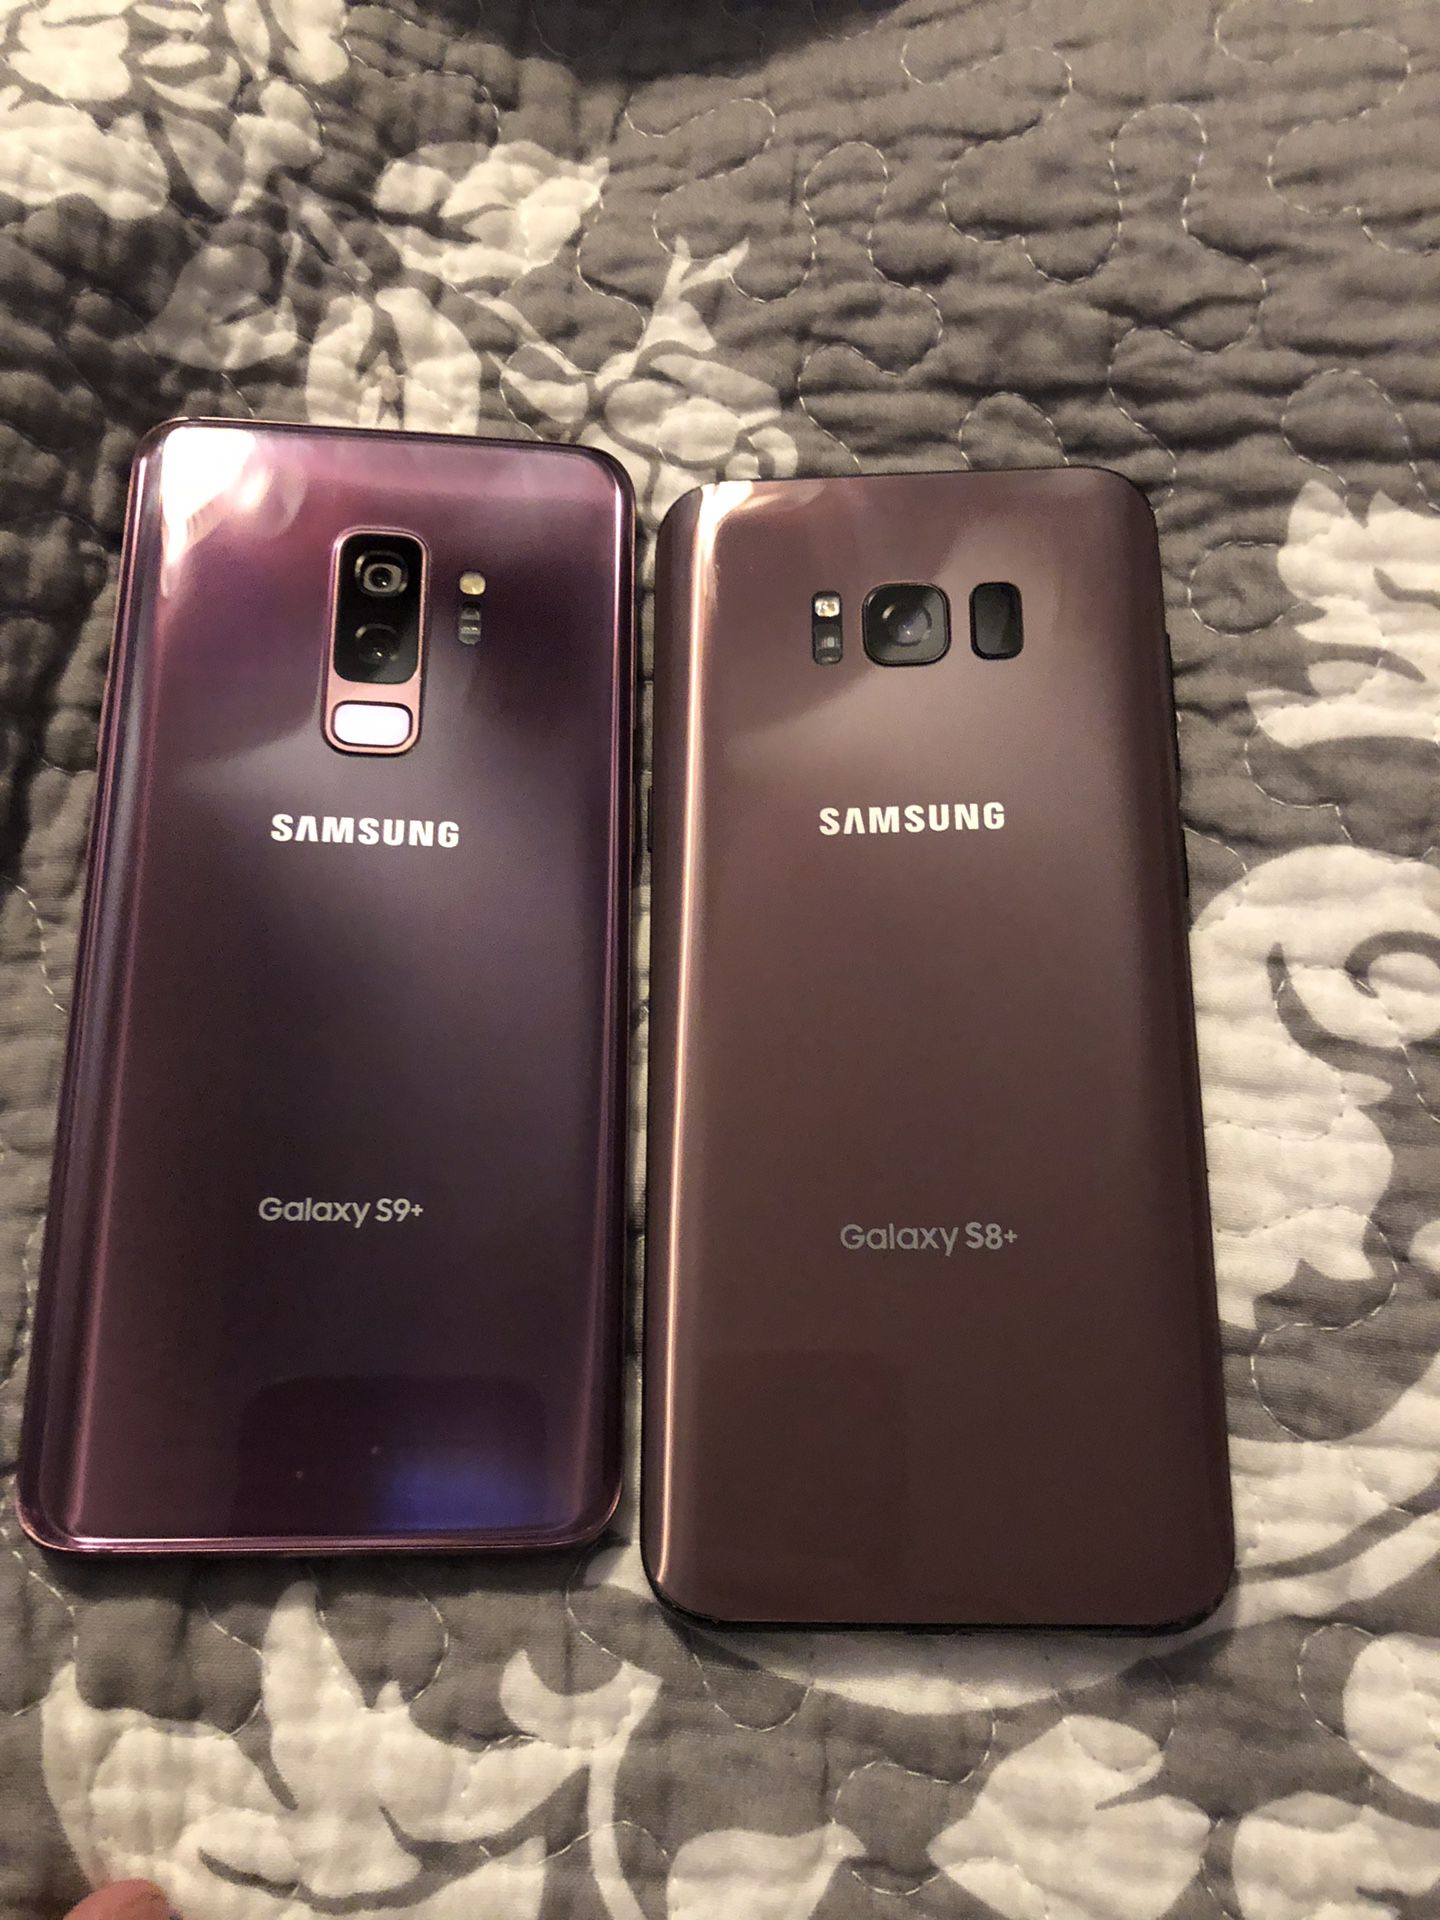 Samsung galaxy s8+ / s9+ UNLOCKED att T-Mobile METRO PCS cricket *possible iPhone trade s9 s8 plus